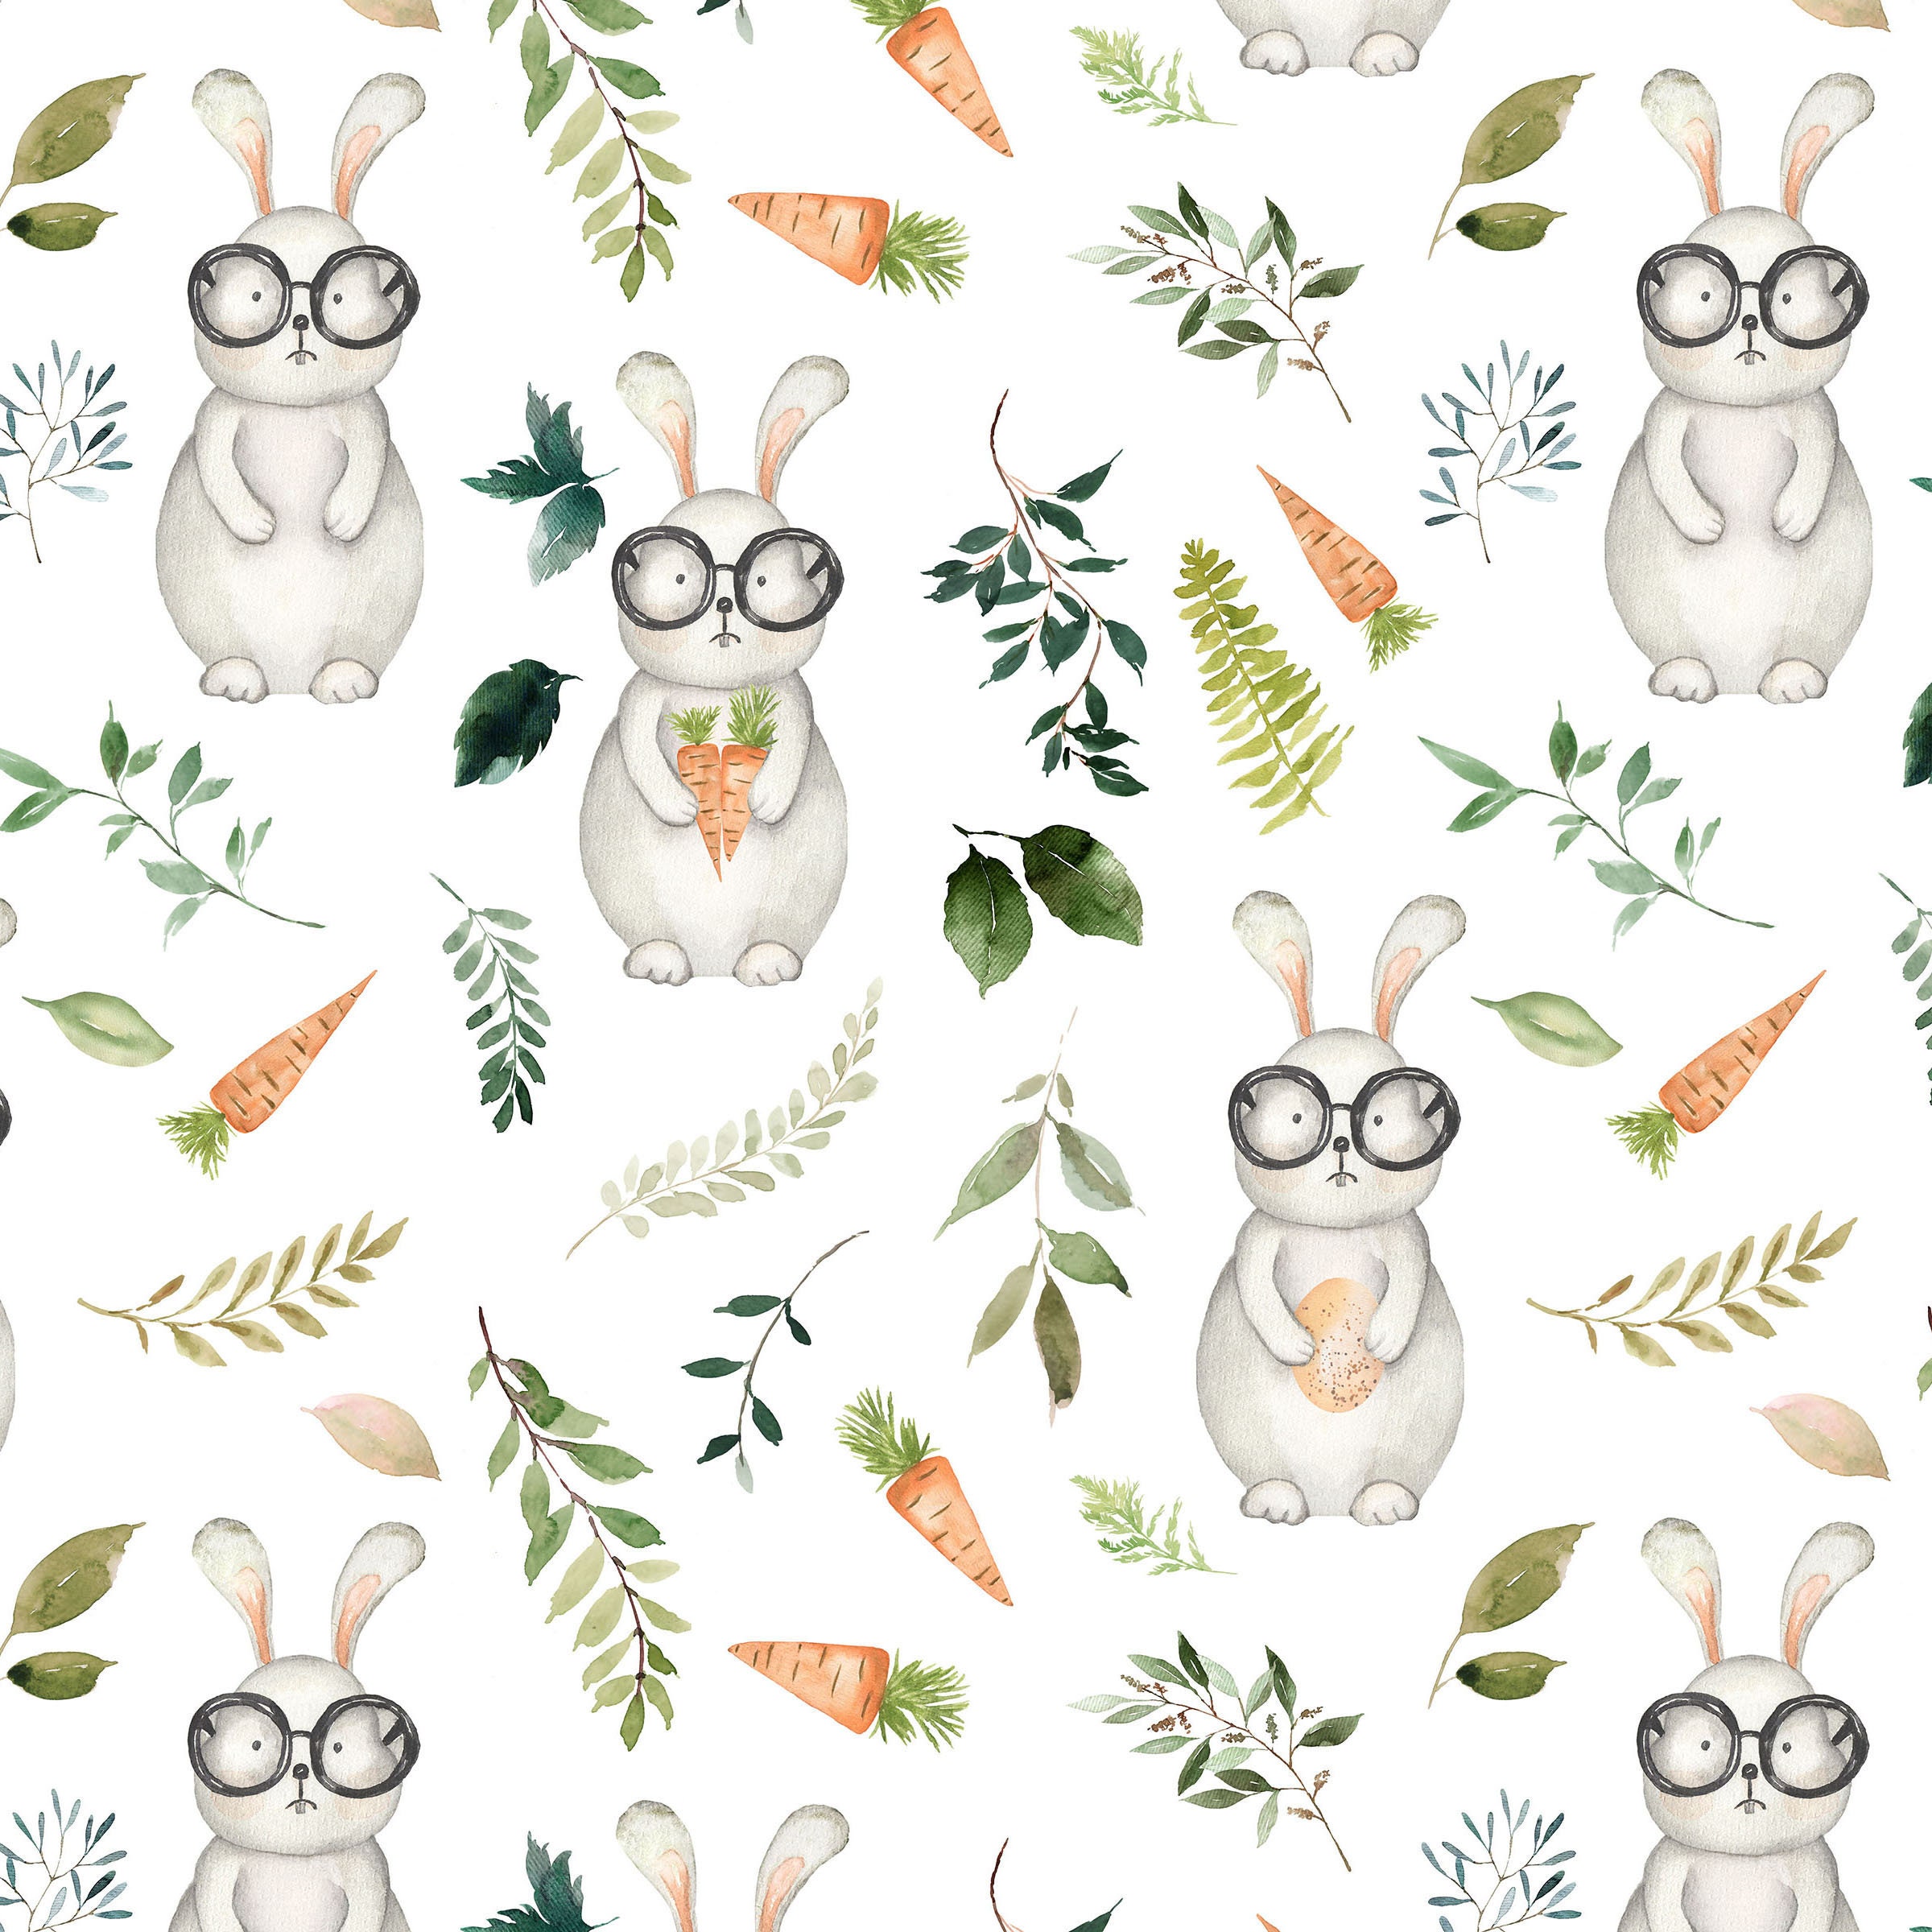 Green Fabric A Wooly Garden Garden Bunnies 10473-04 Rabbit Fabric Benartex Quilting Cotton Fabric By The Yard Bunny Fabric